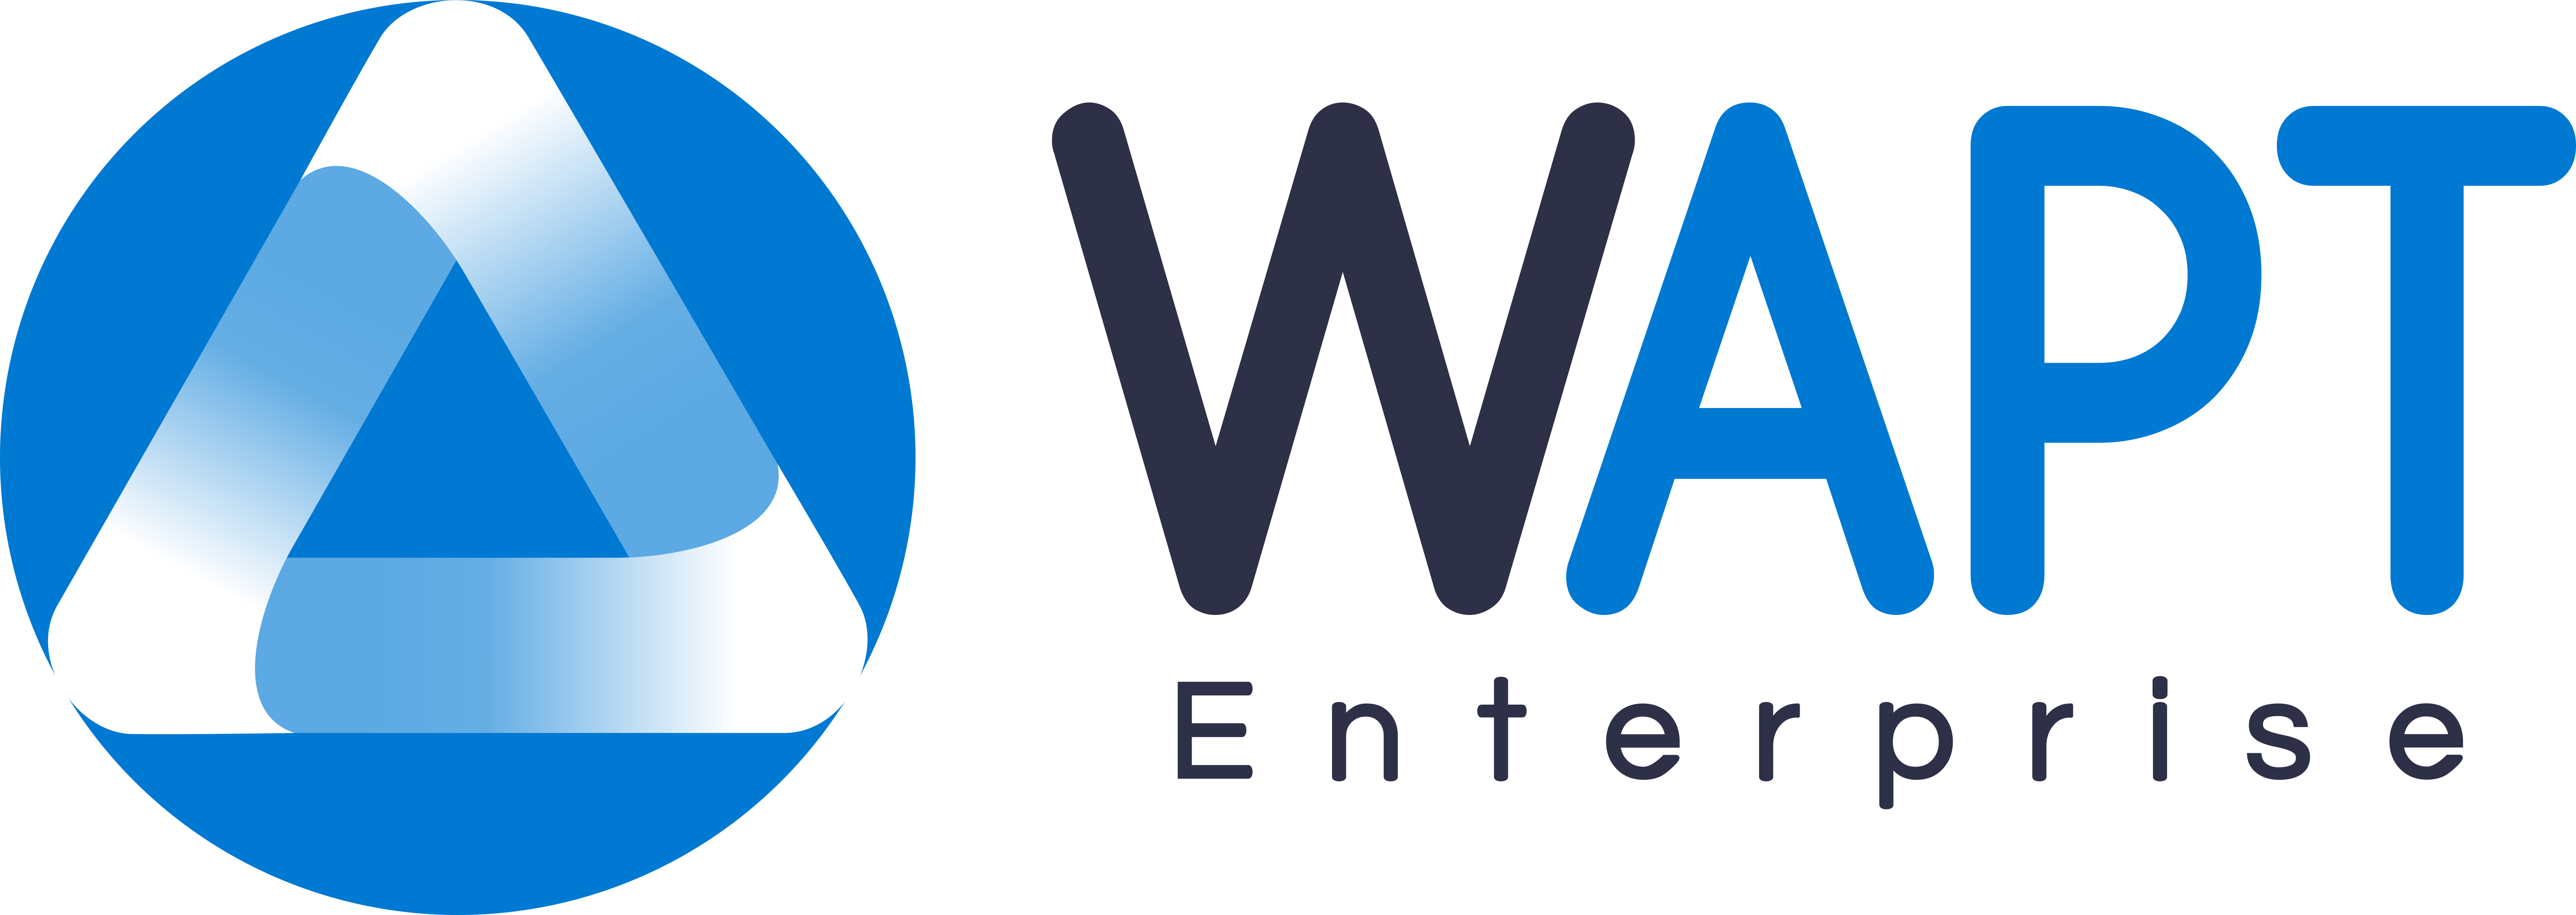 WAPT Enterprise feature only